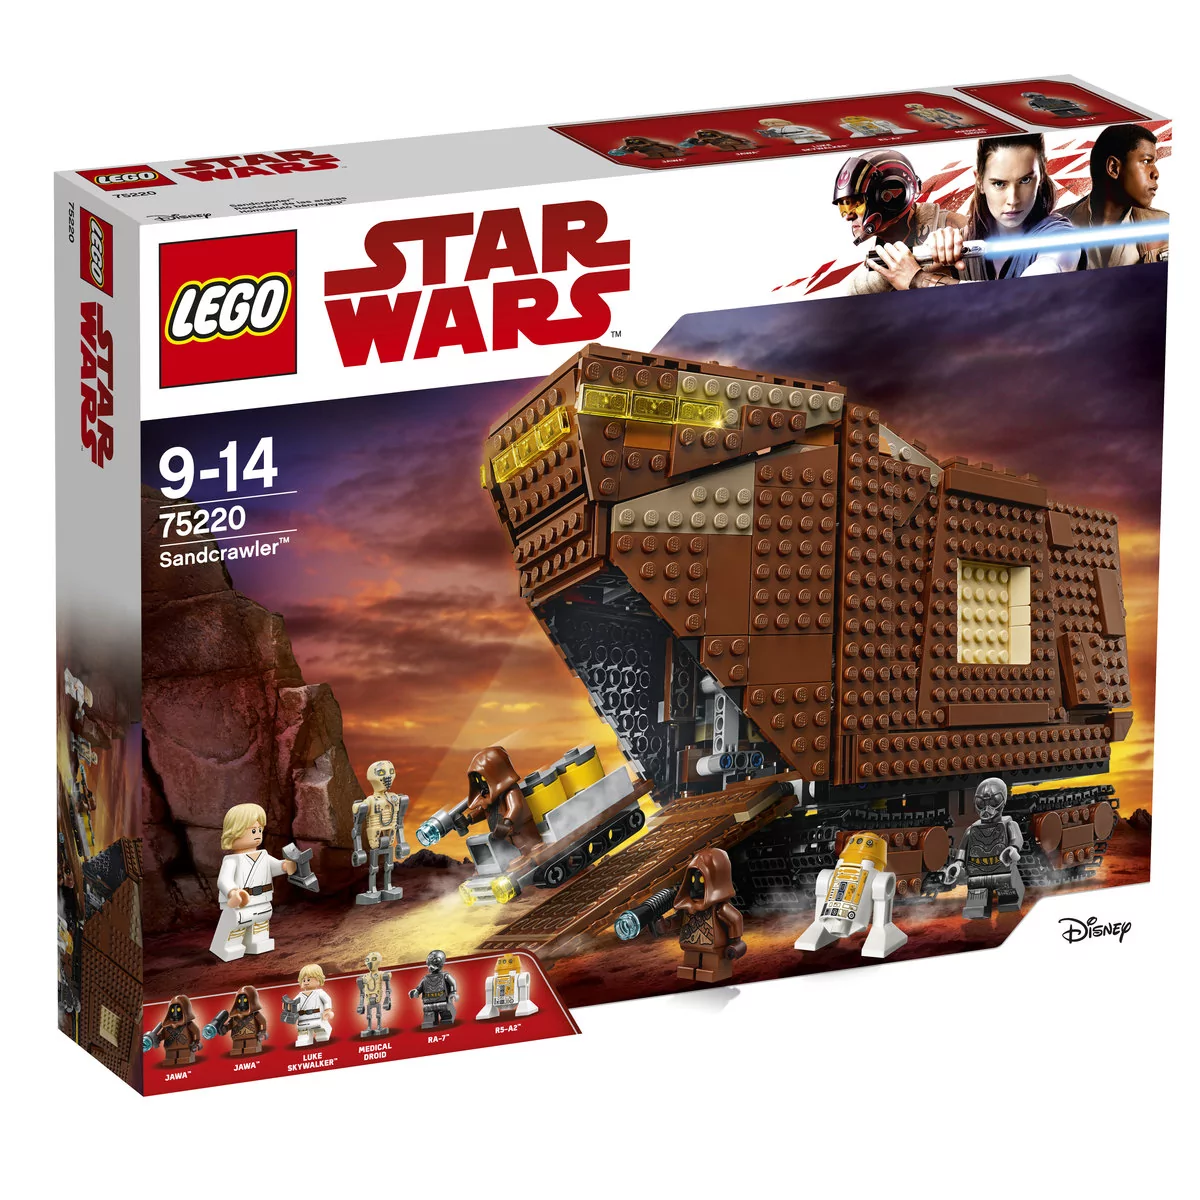 LEGO Star Wars andcrawler 75220